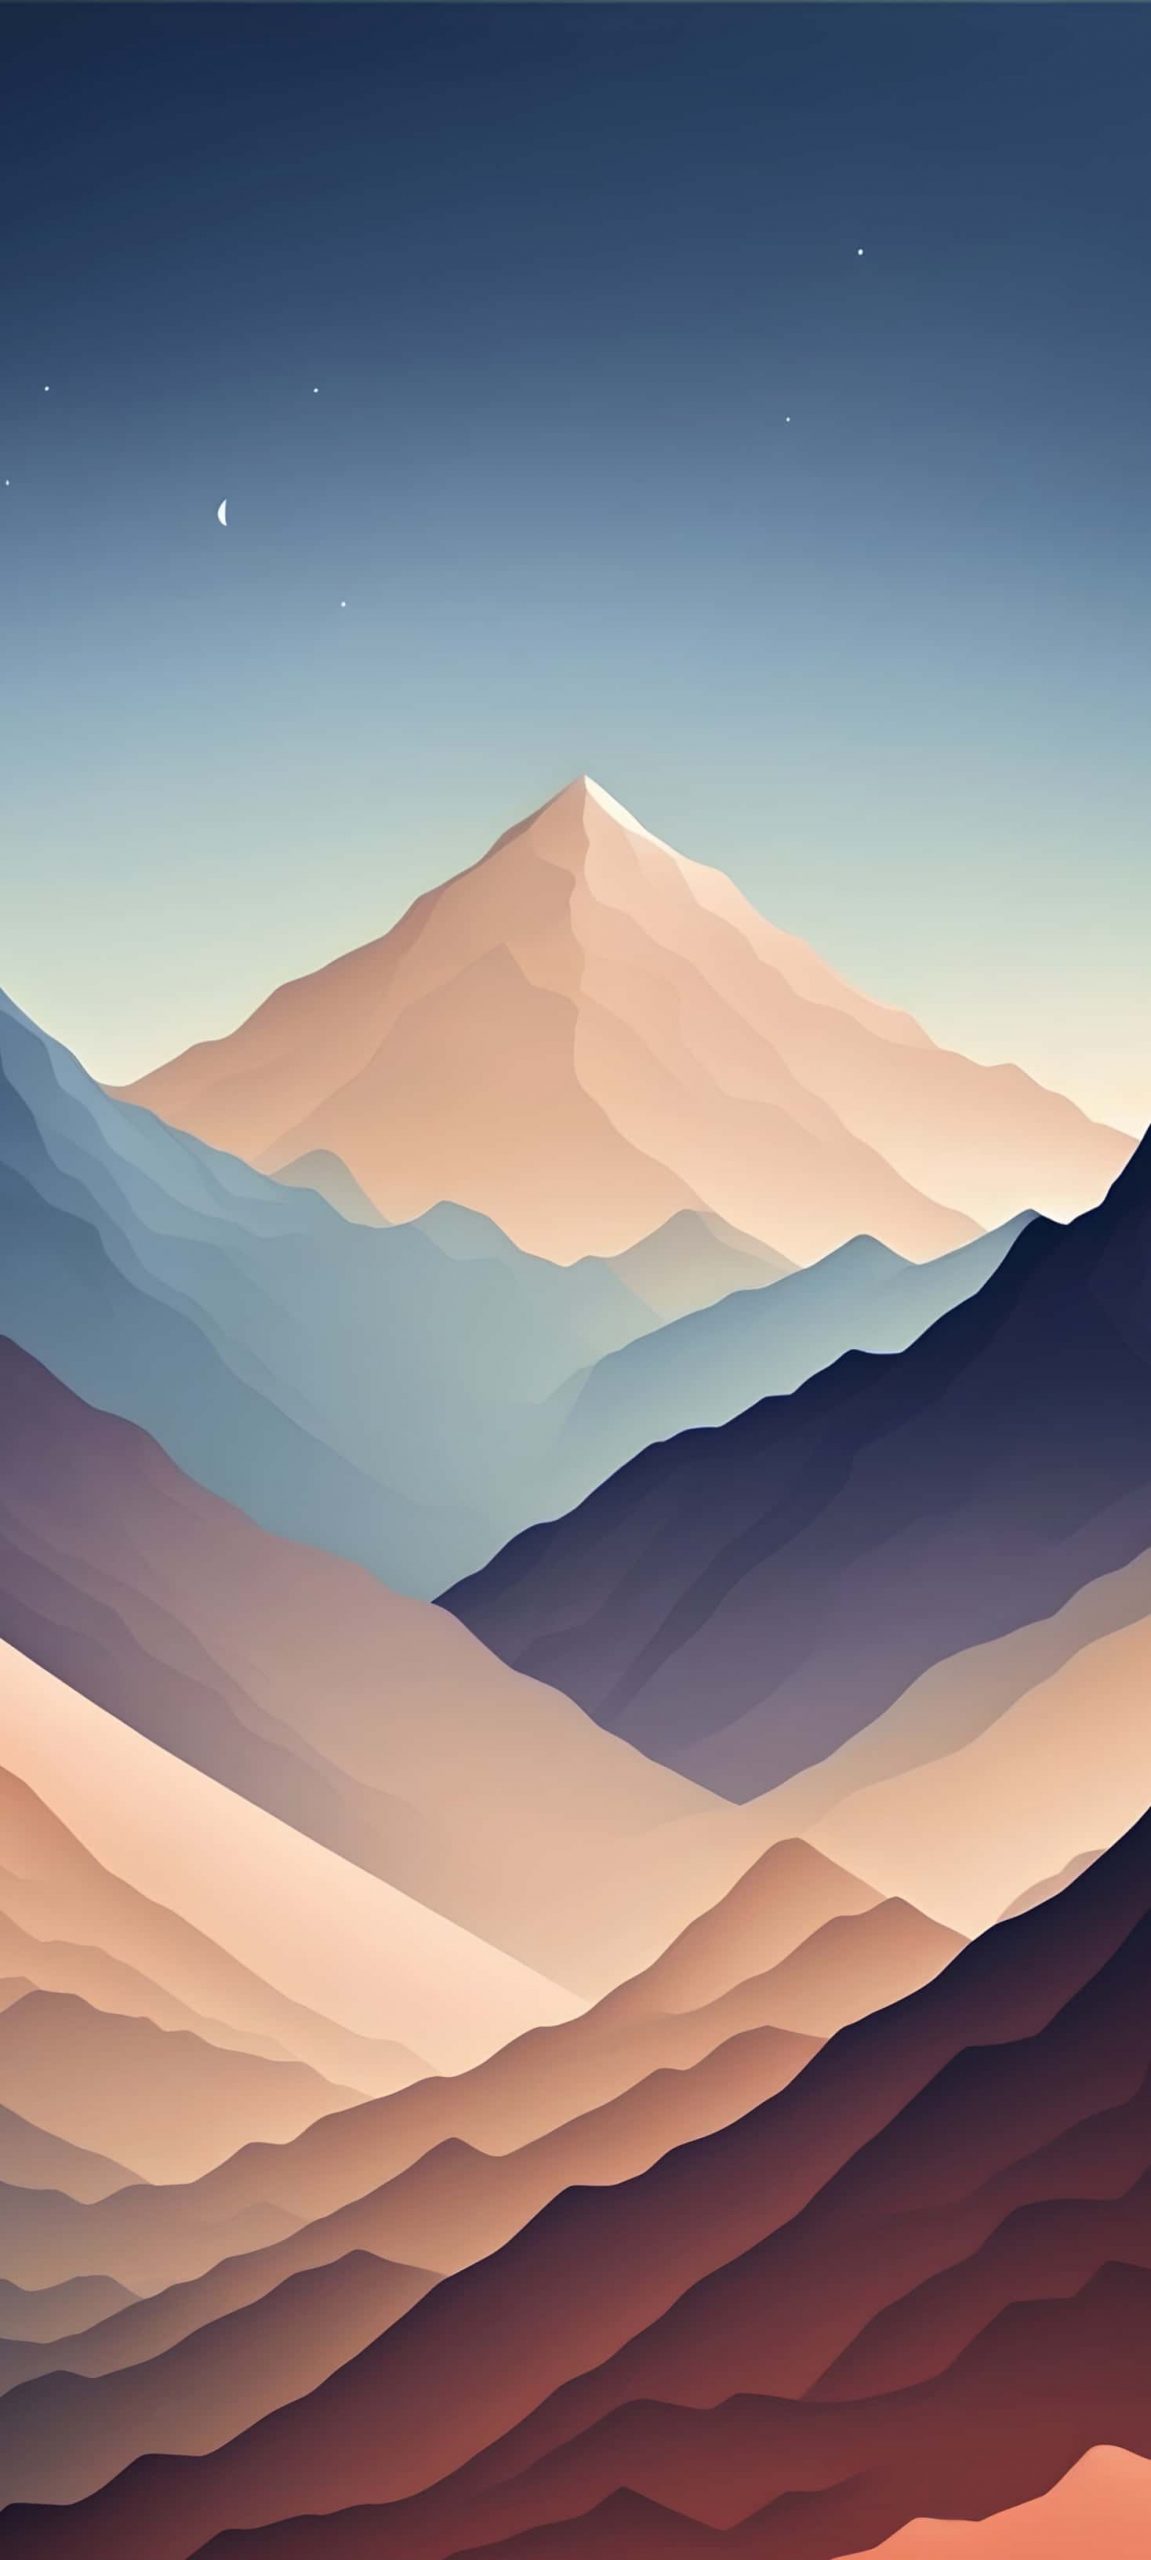 Mountains Minimal iPhone Wallpaper HD